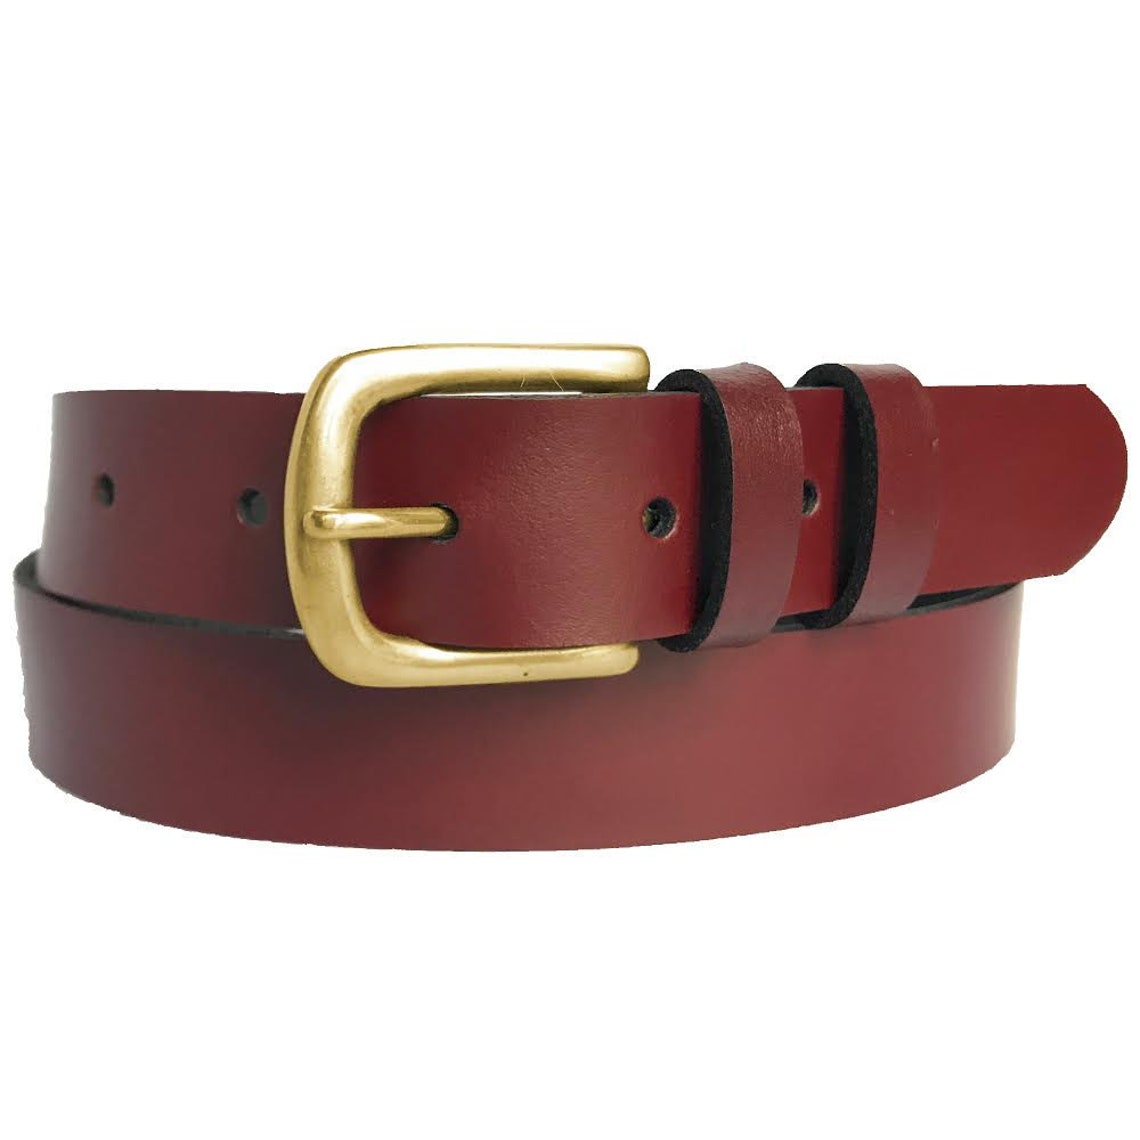 Oxblood Burgundy Leather belt for women & men. 30mm wide. | Etsy